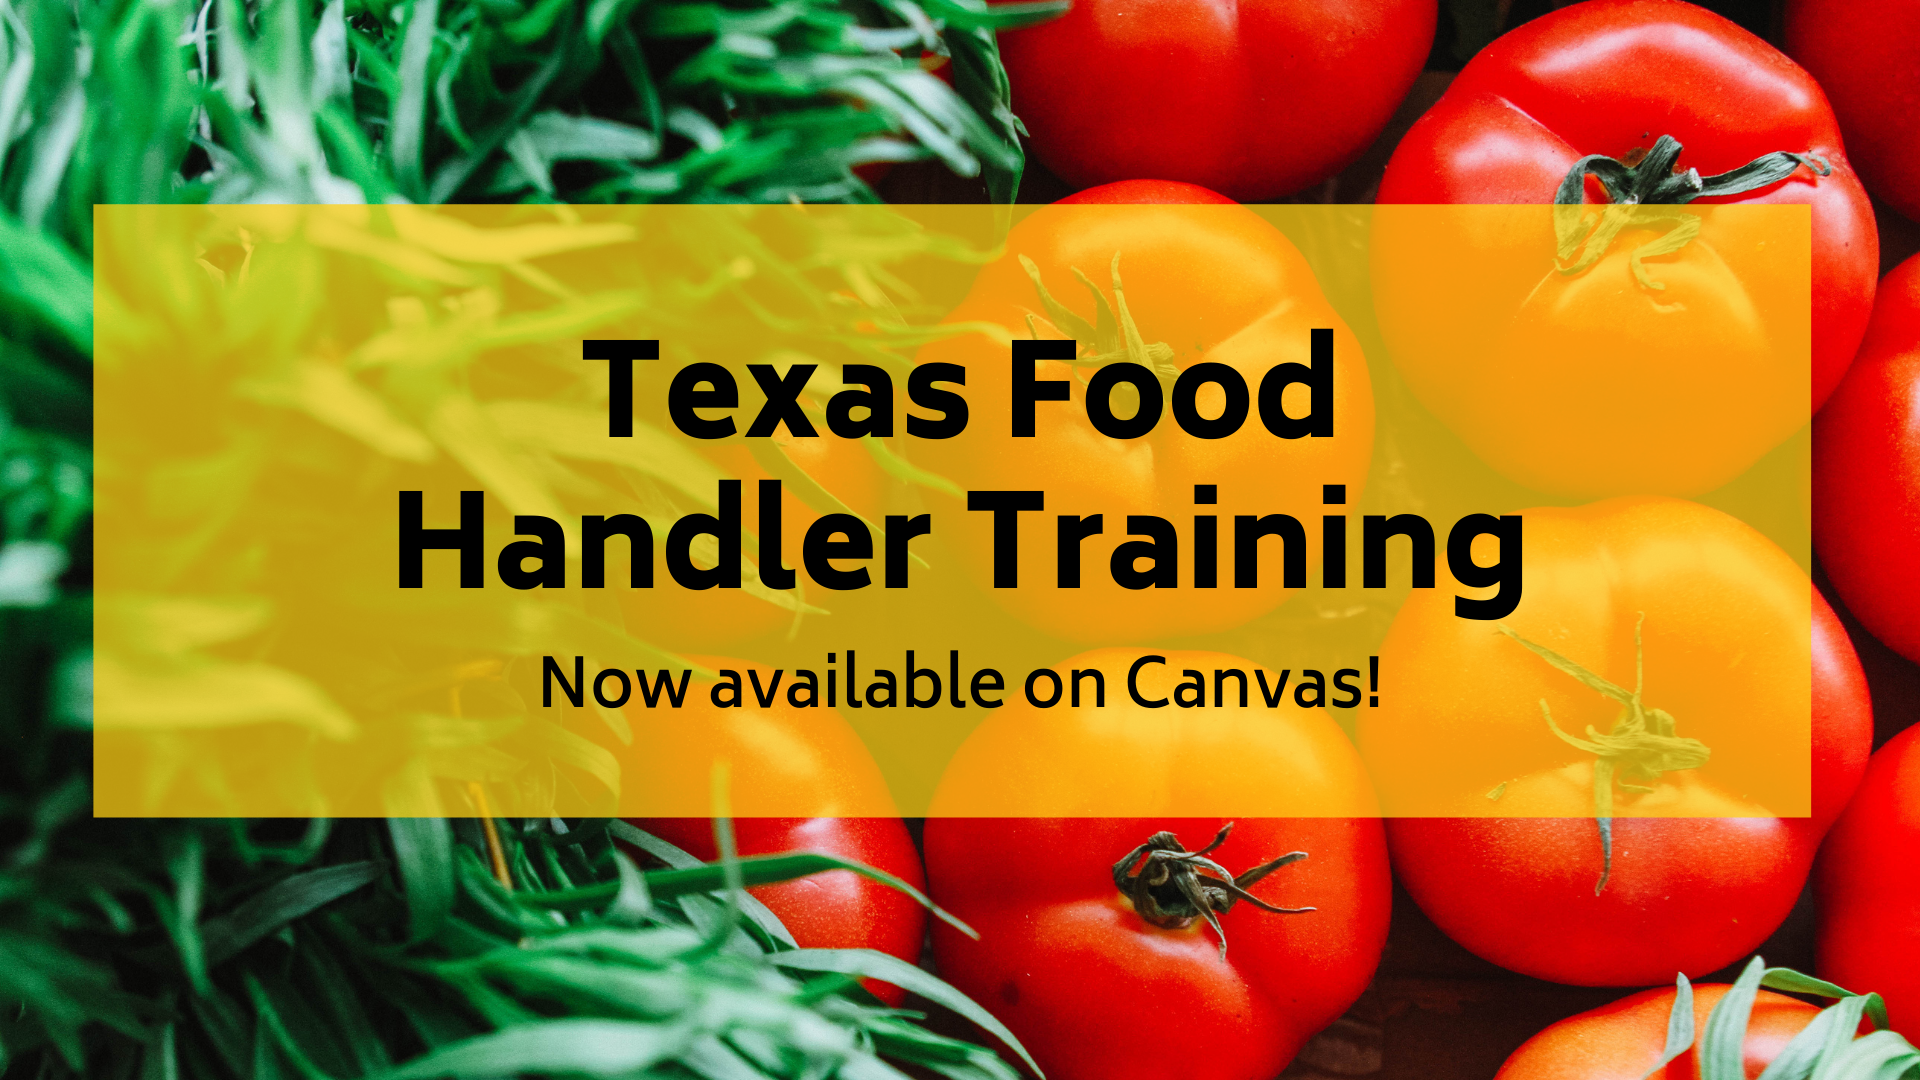 Texas Food Handler Training available on Canvas